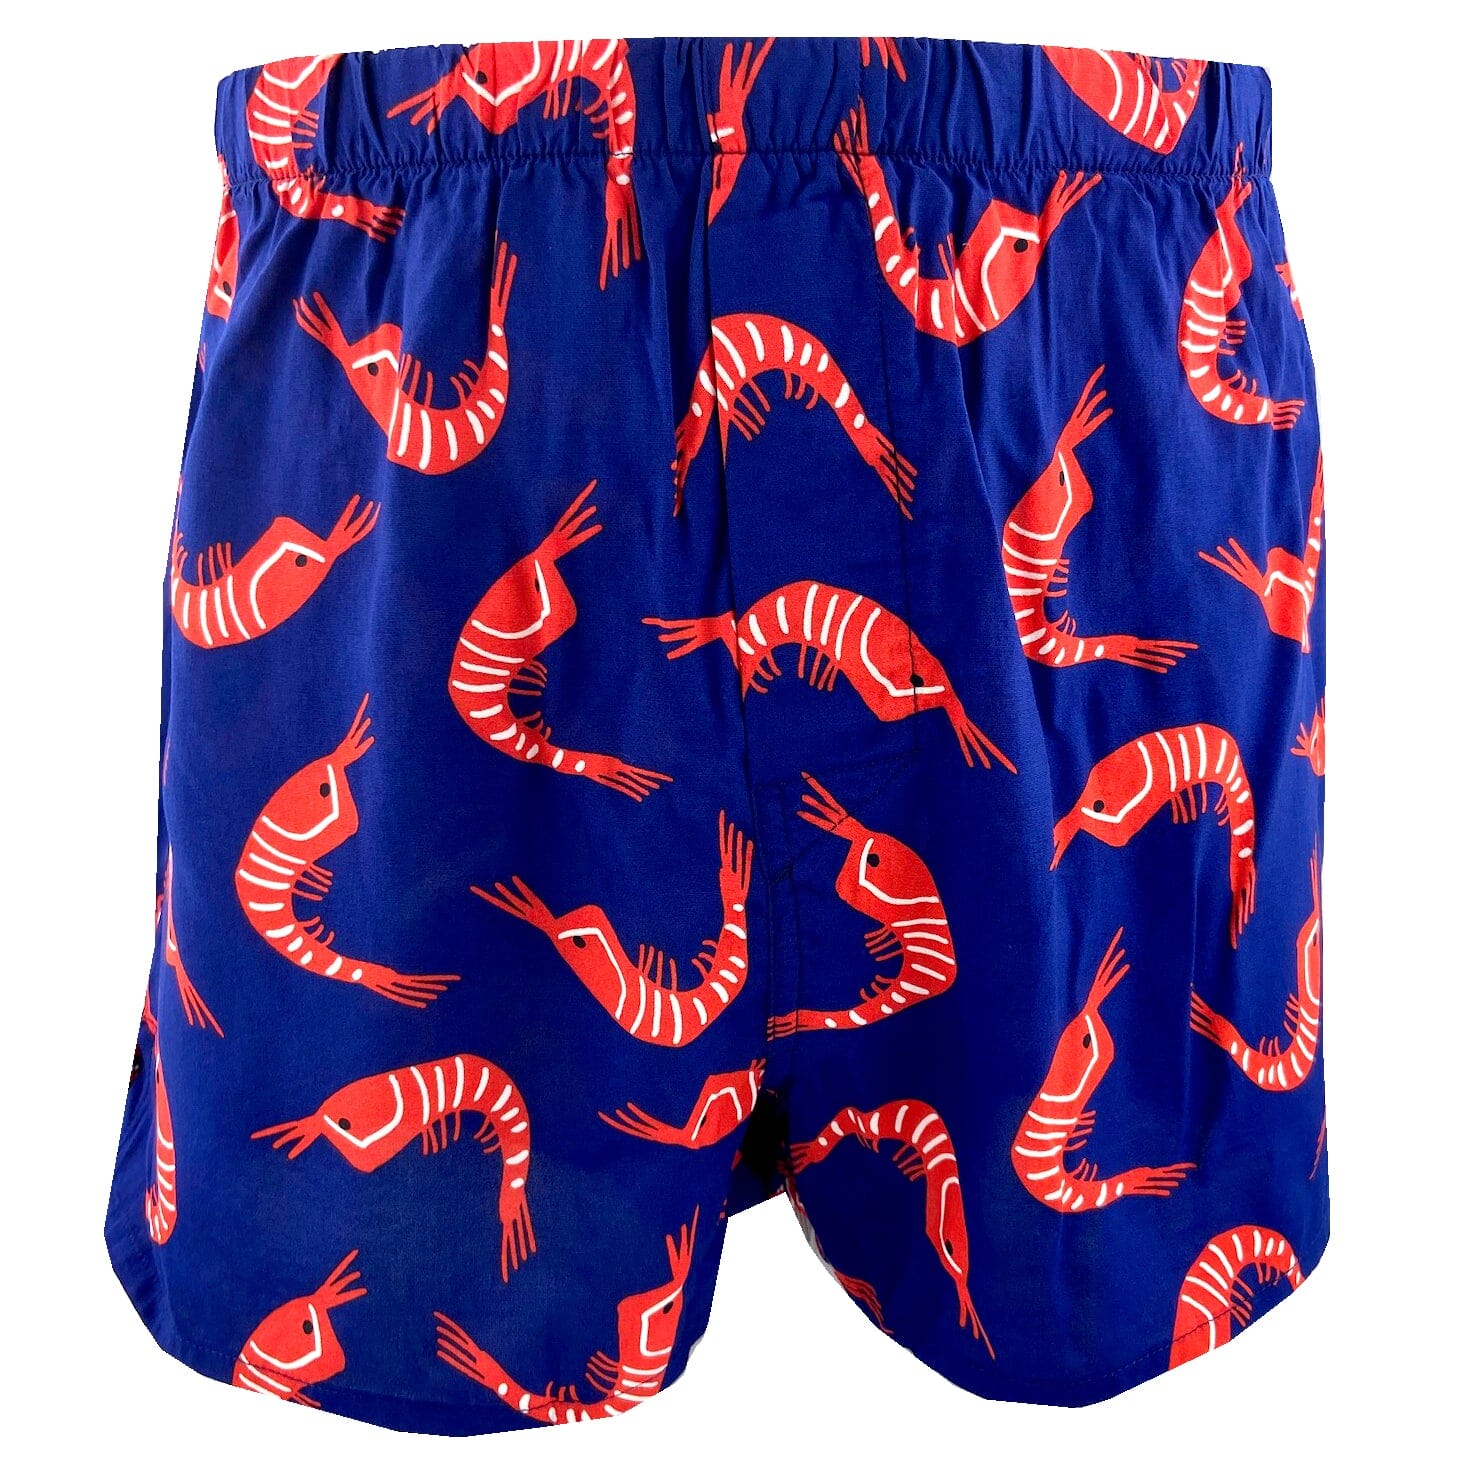 Men's Navy Blue Crayfish All-Over Novelty Print Cotton Boxer Shorts